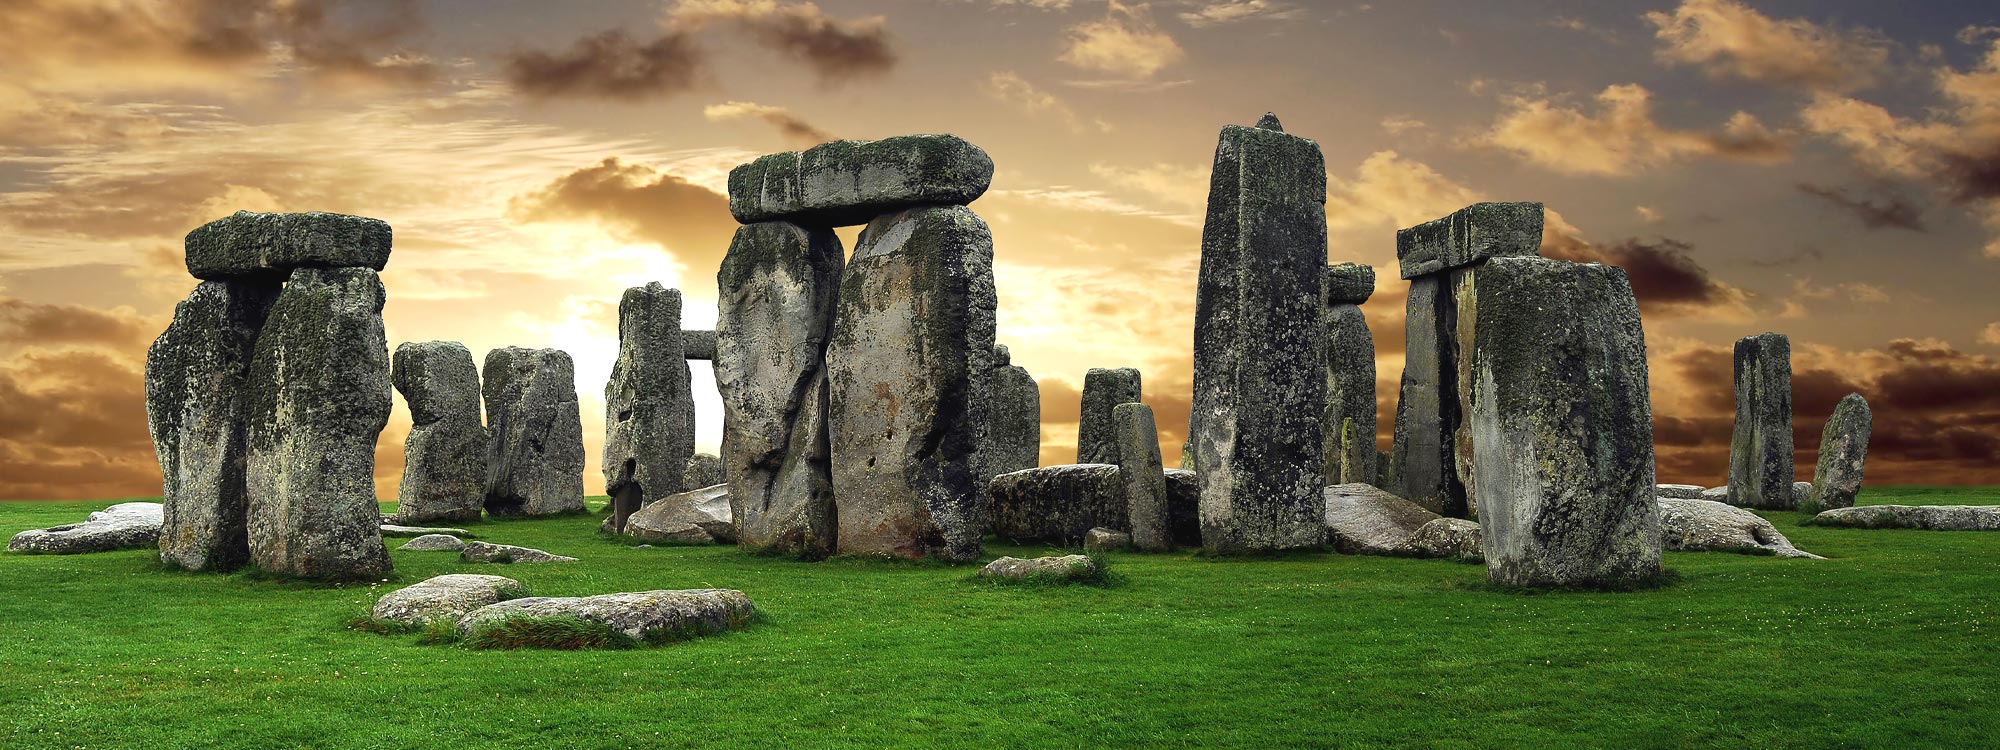 Der weltberühmte Steinkreis Stonehenge